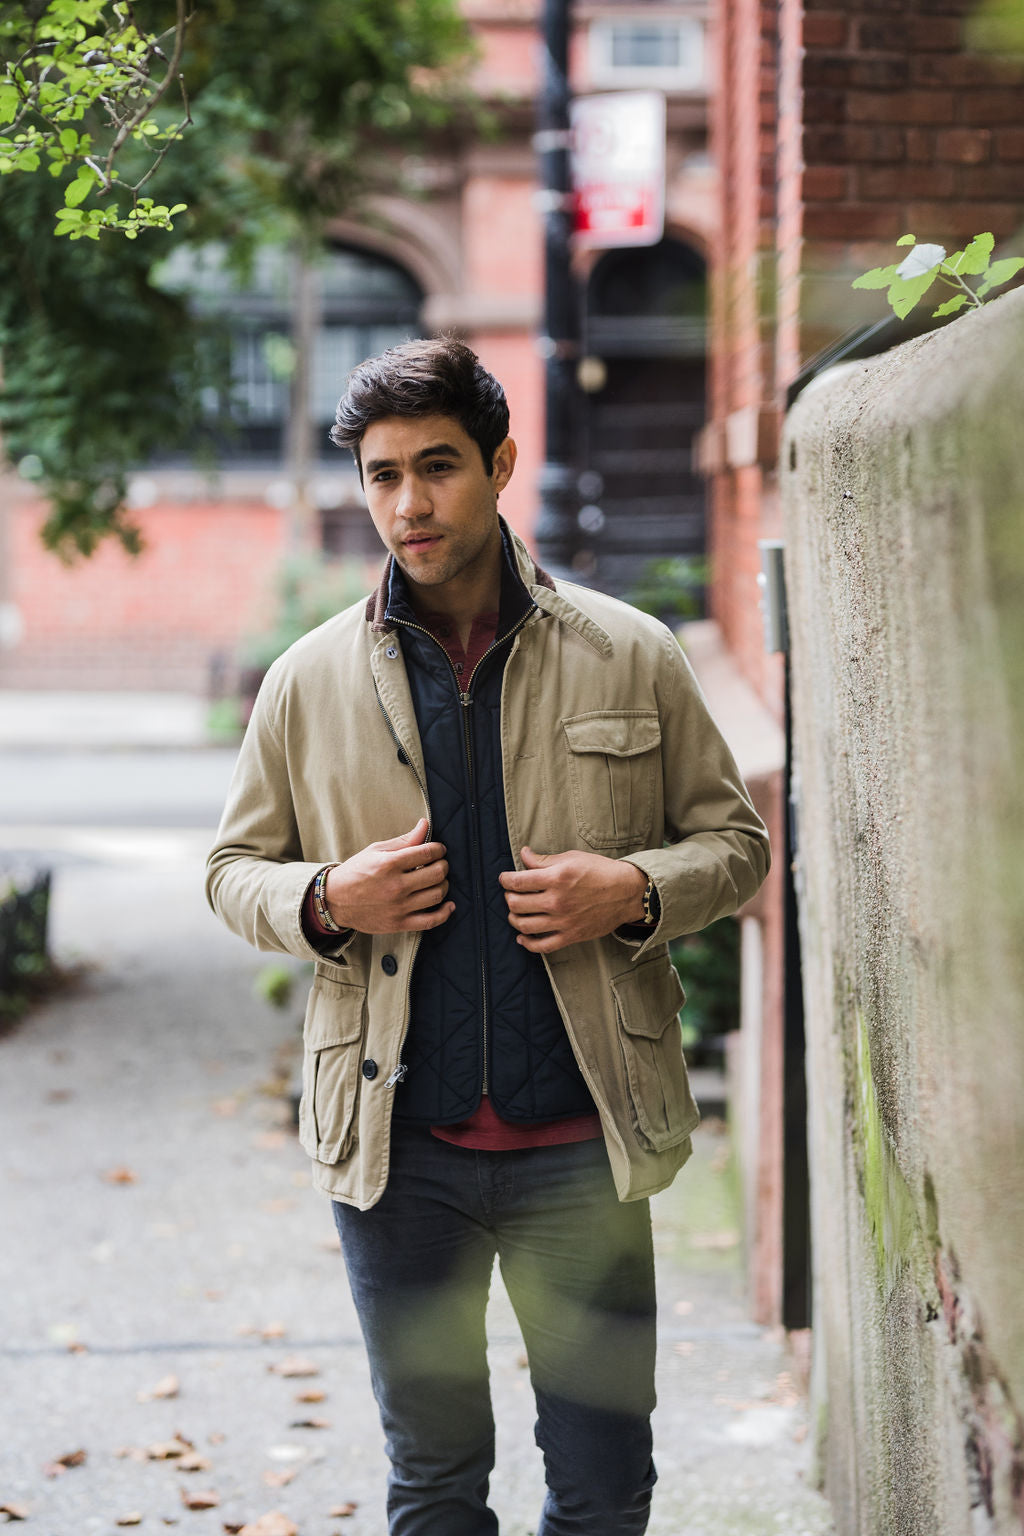 Men's Designer Leather Jackets & Mid-Layer Pieces